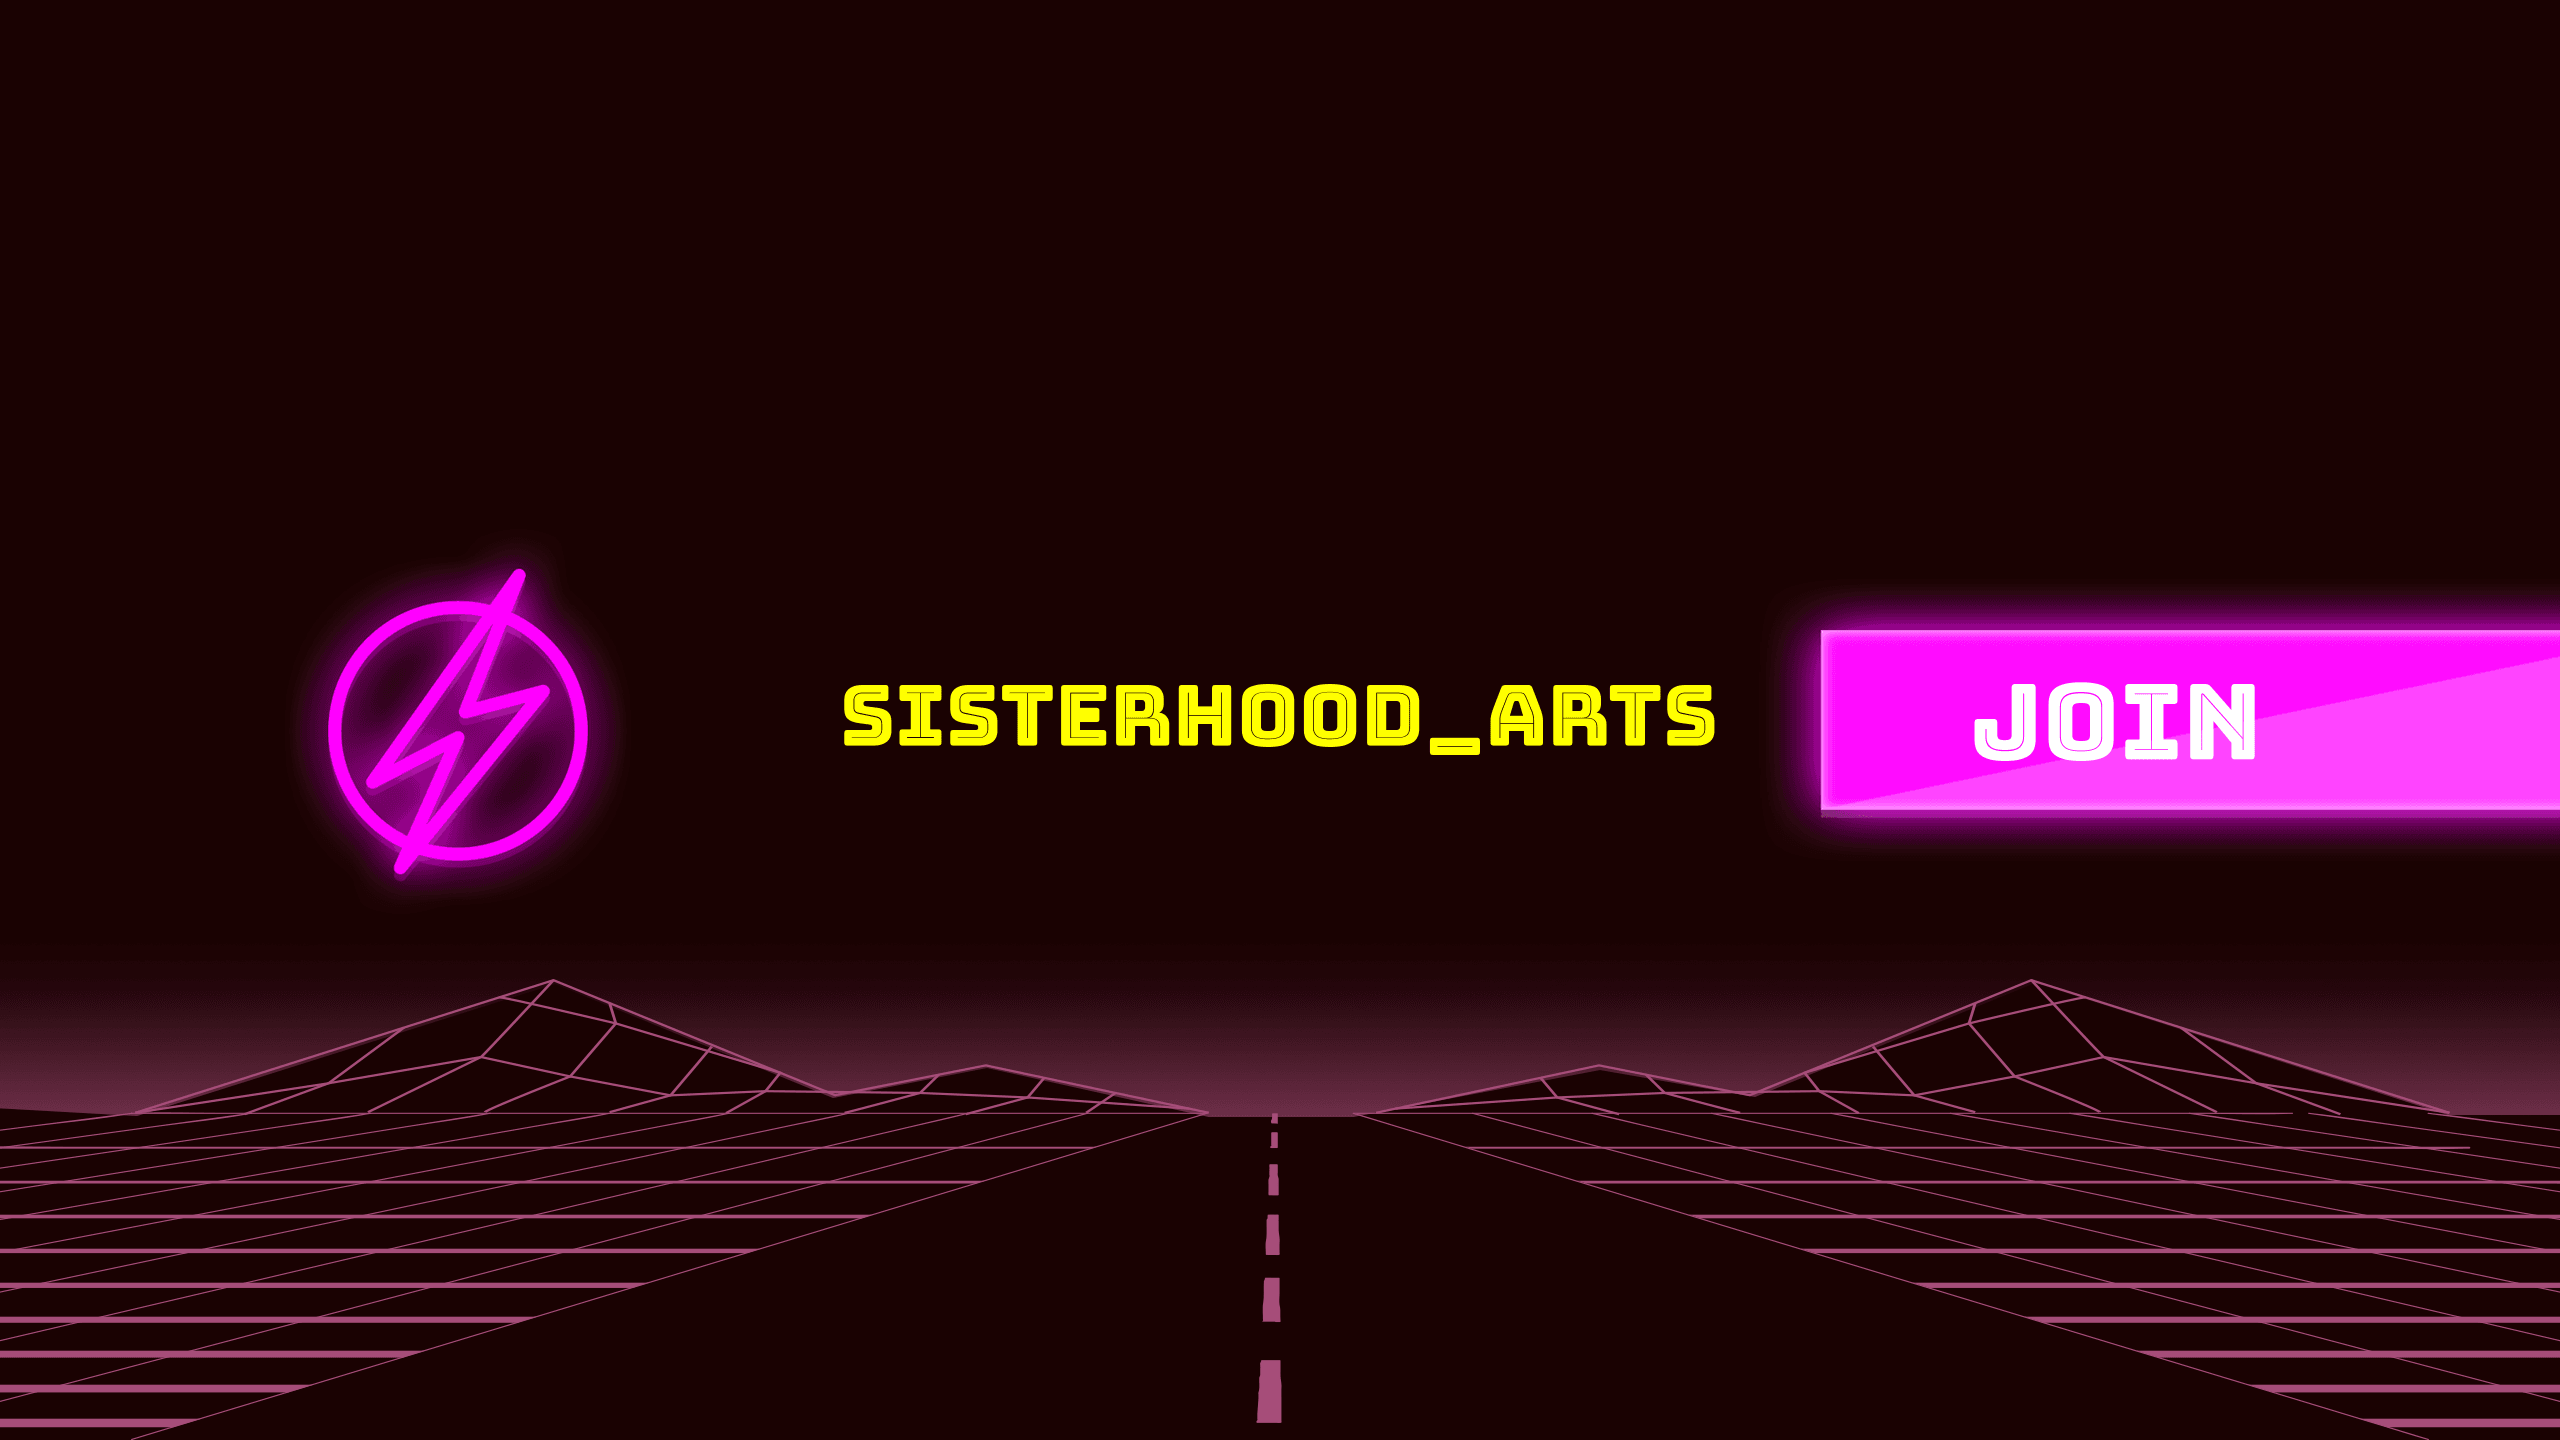 Sisterhood_Arts バナー